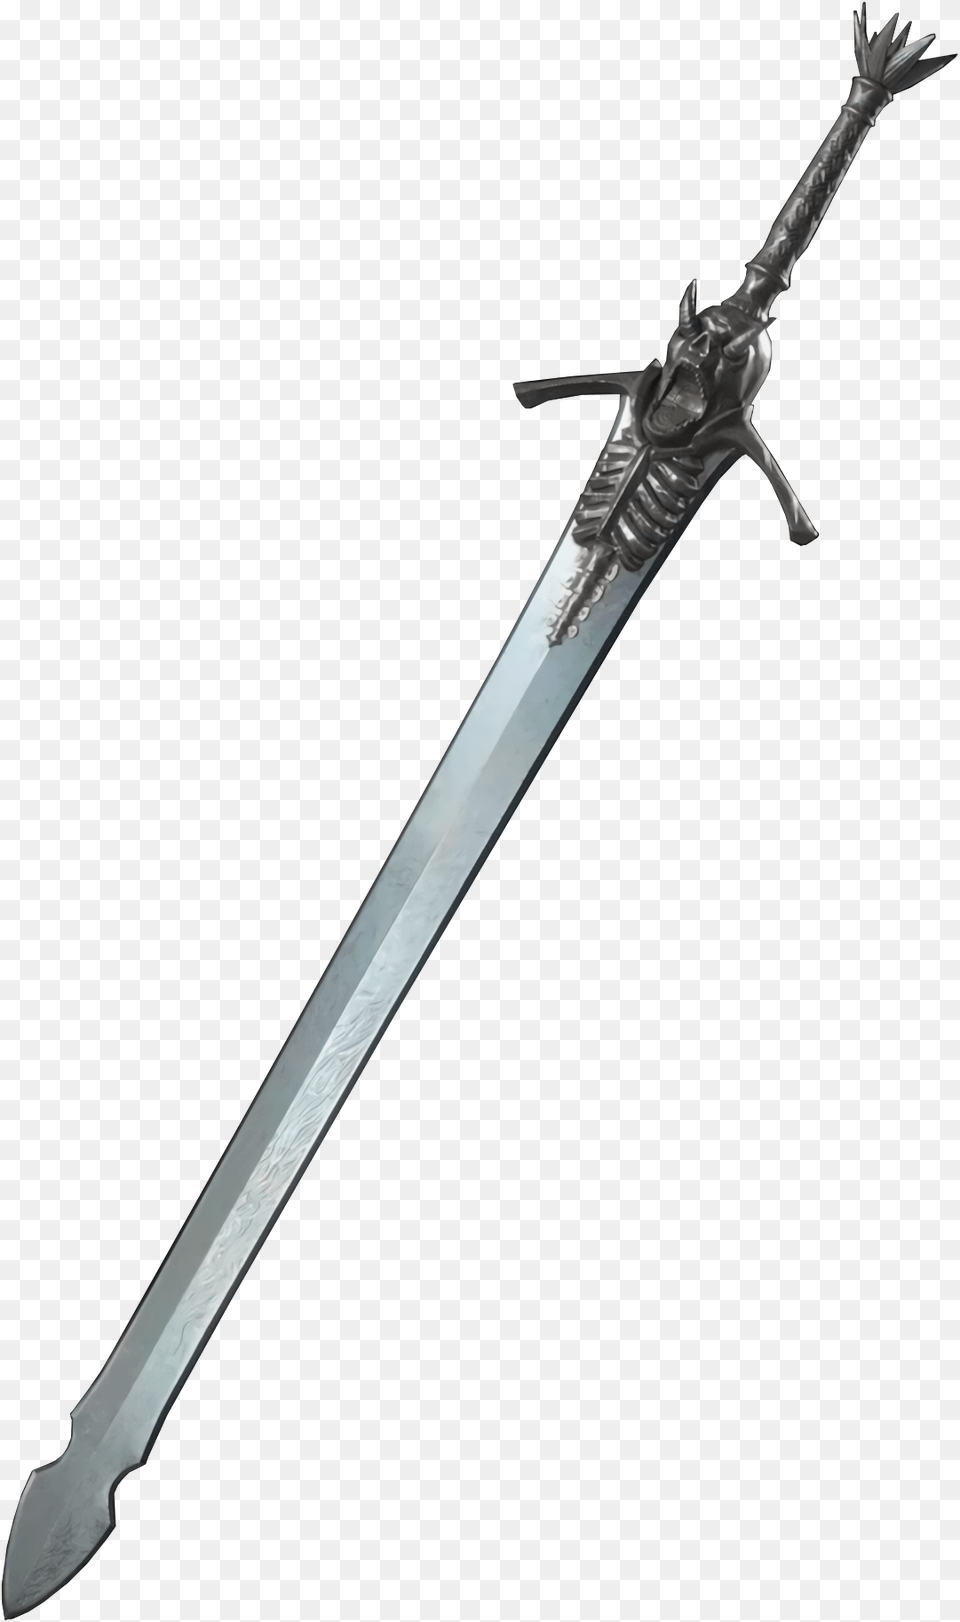 Voir Le Sujet Prcdent Devil May Cry Sword, Weapon, Blade, Dagger, Knife Free Transparent Png